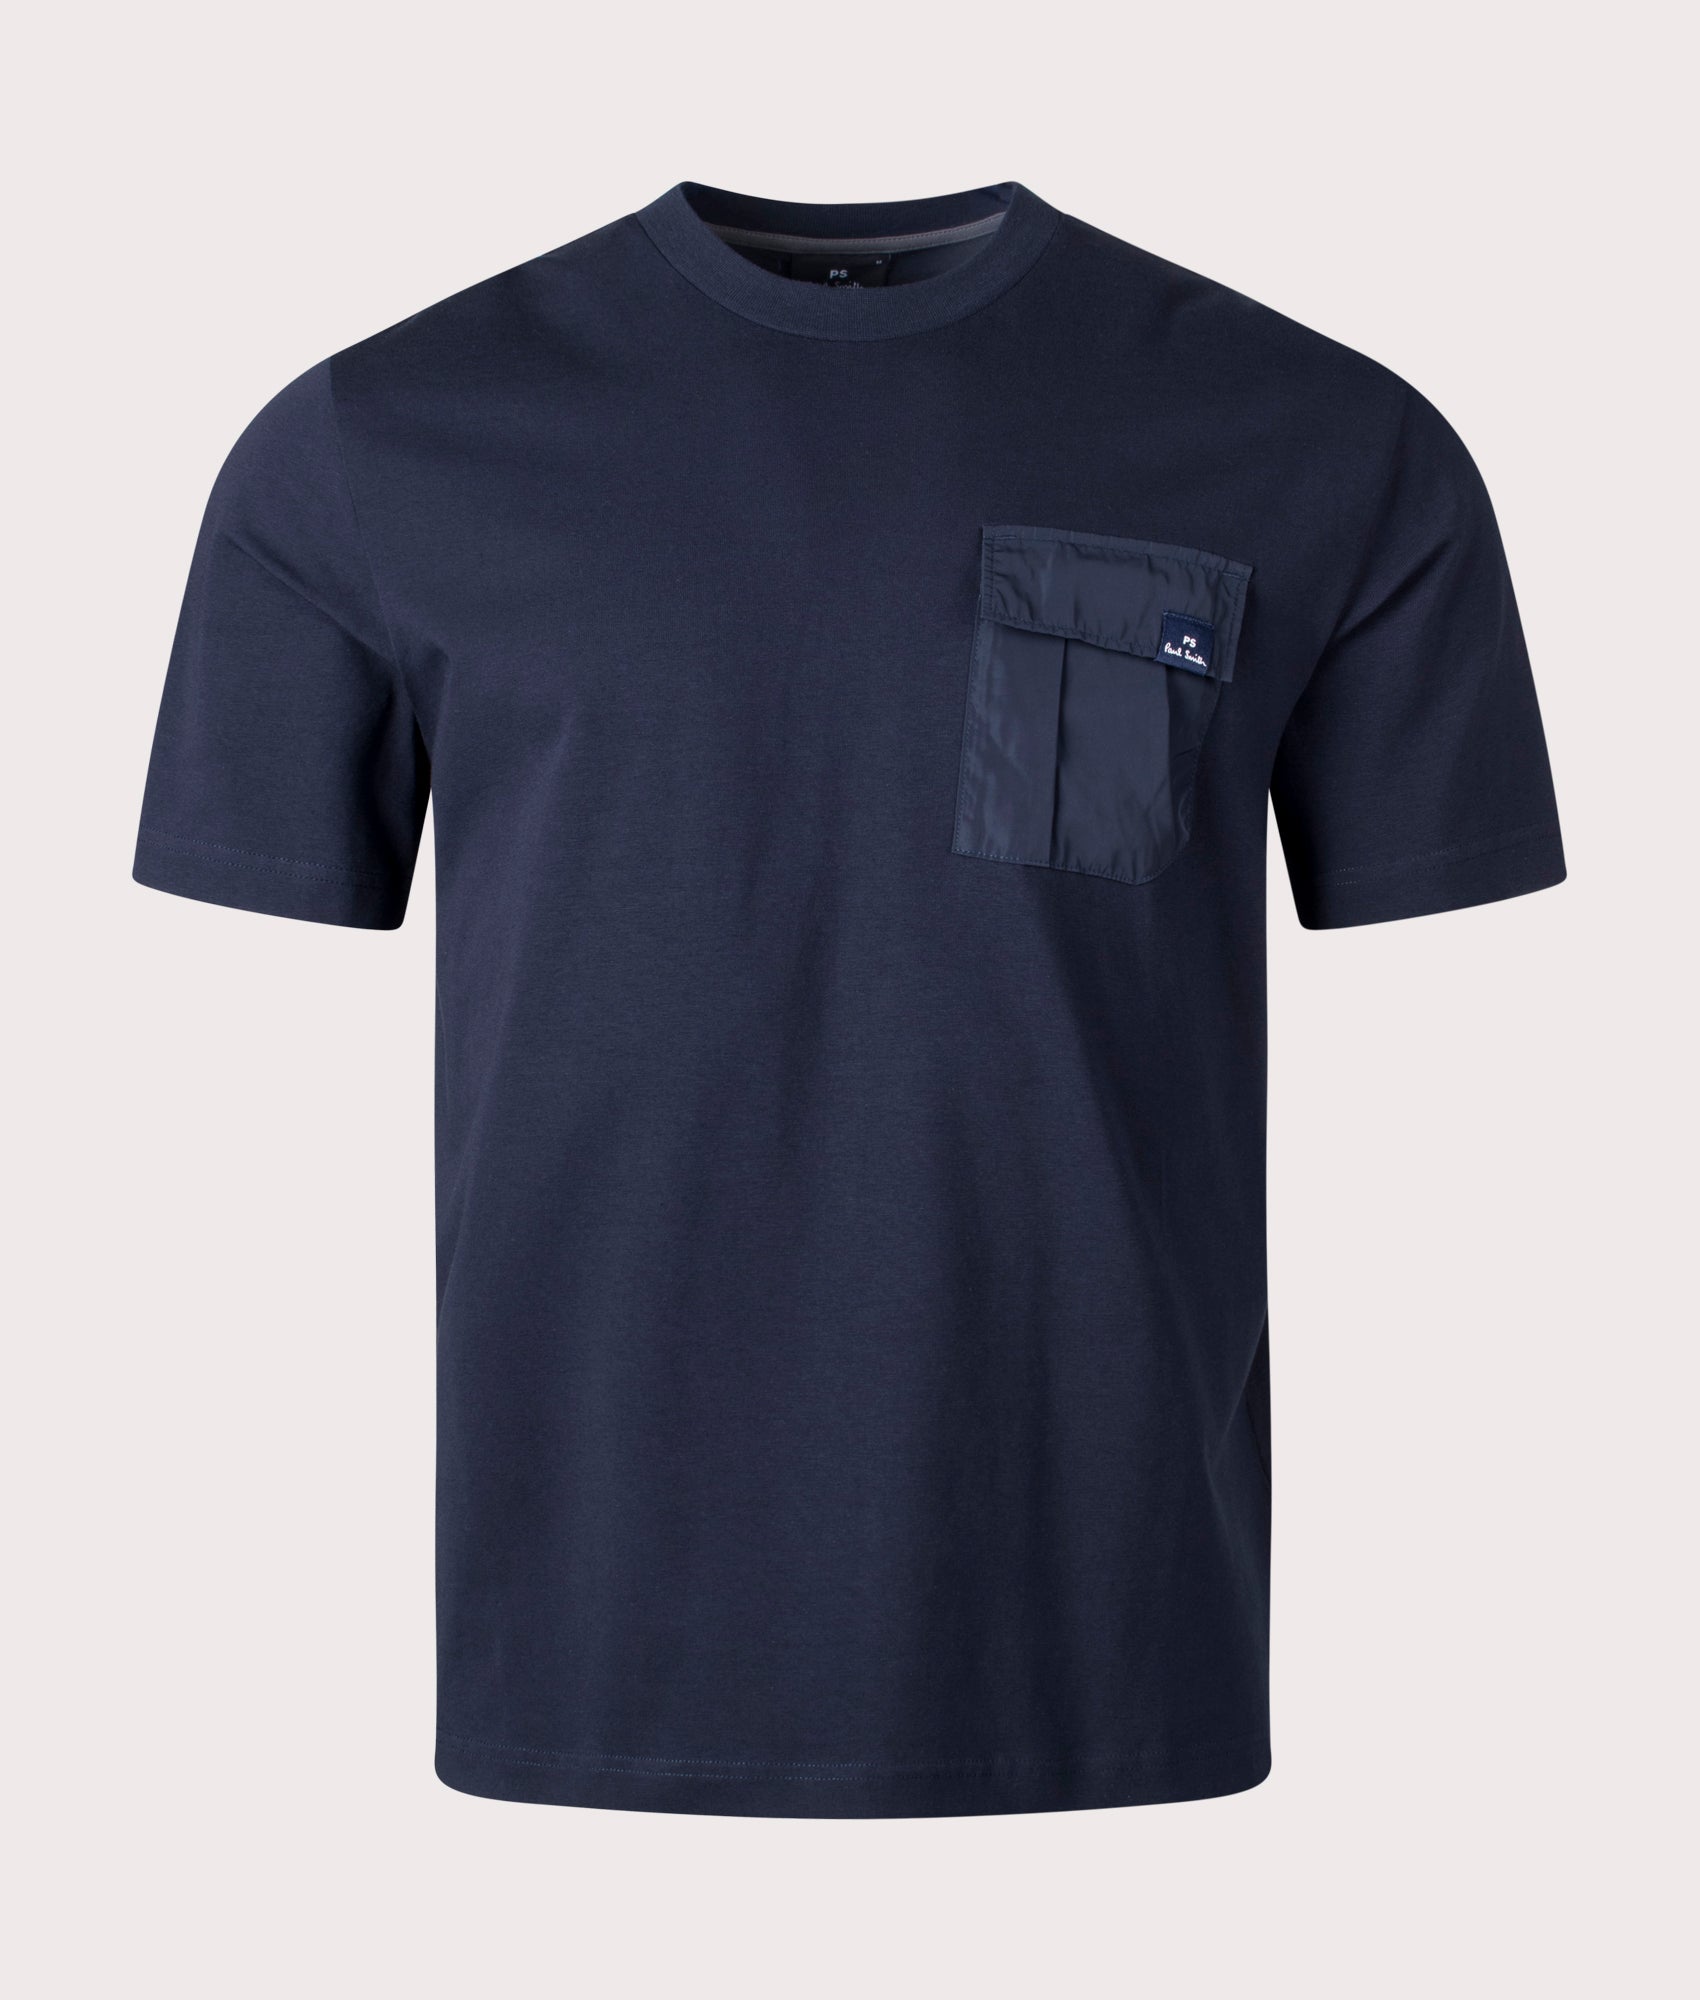 PS Paul Smith Mens Pocket T-Shirt - Colour: 49A Very Dark Navy - Size: Medium